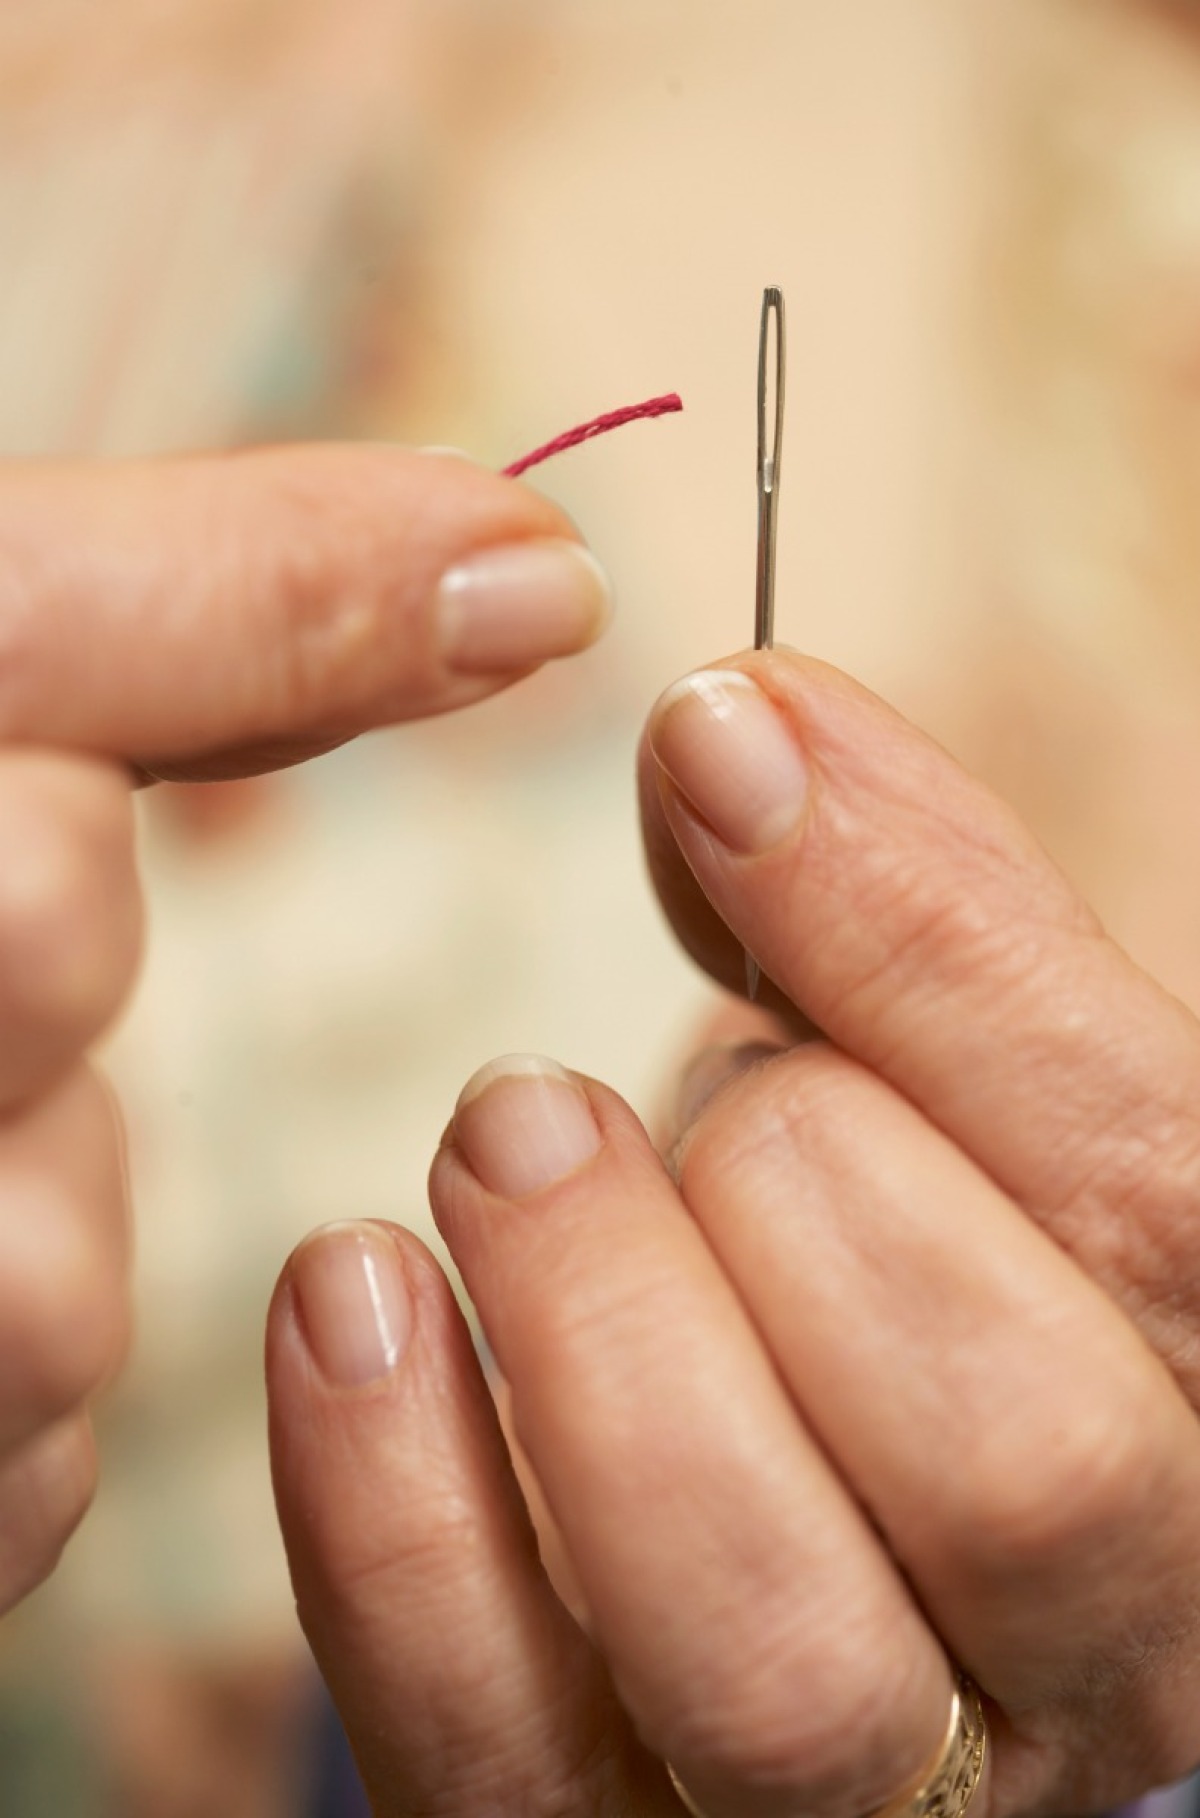 Threading Sewing Needles | ThriftyFun